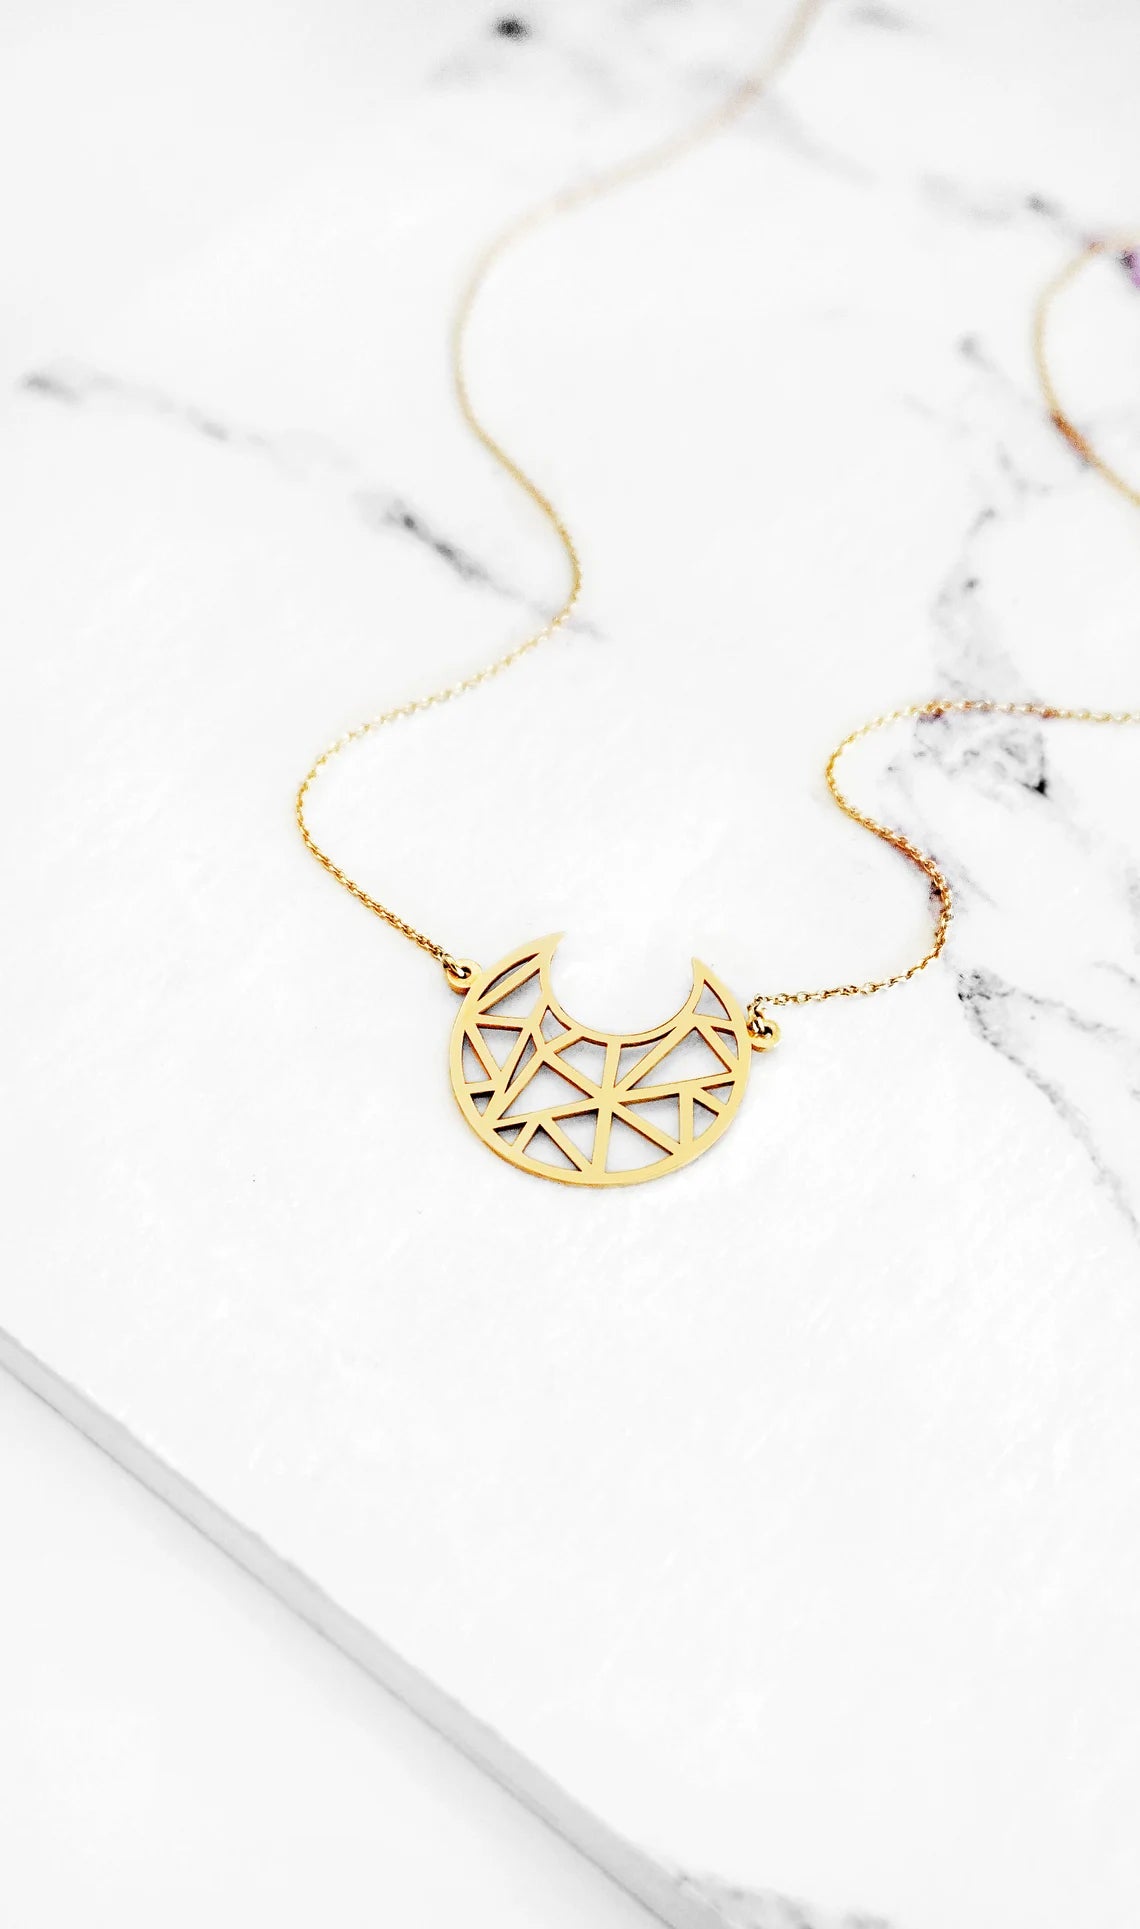 14K Gold Vermeil  Crescent Moon Origami necklace  necklace - Celestial Necklace